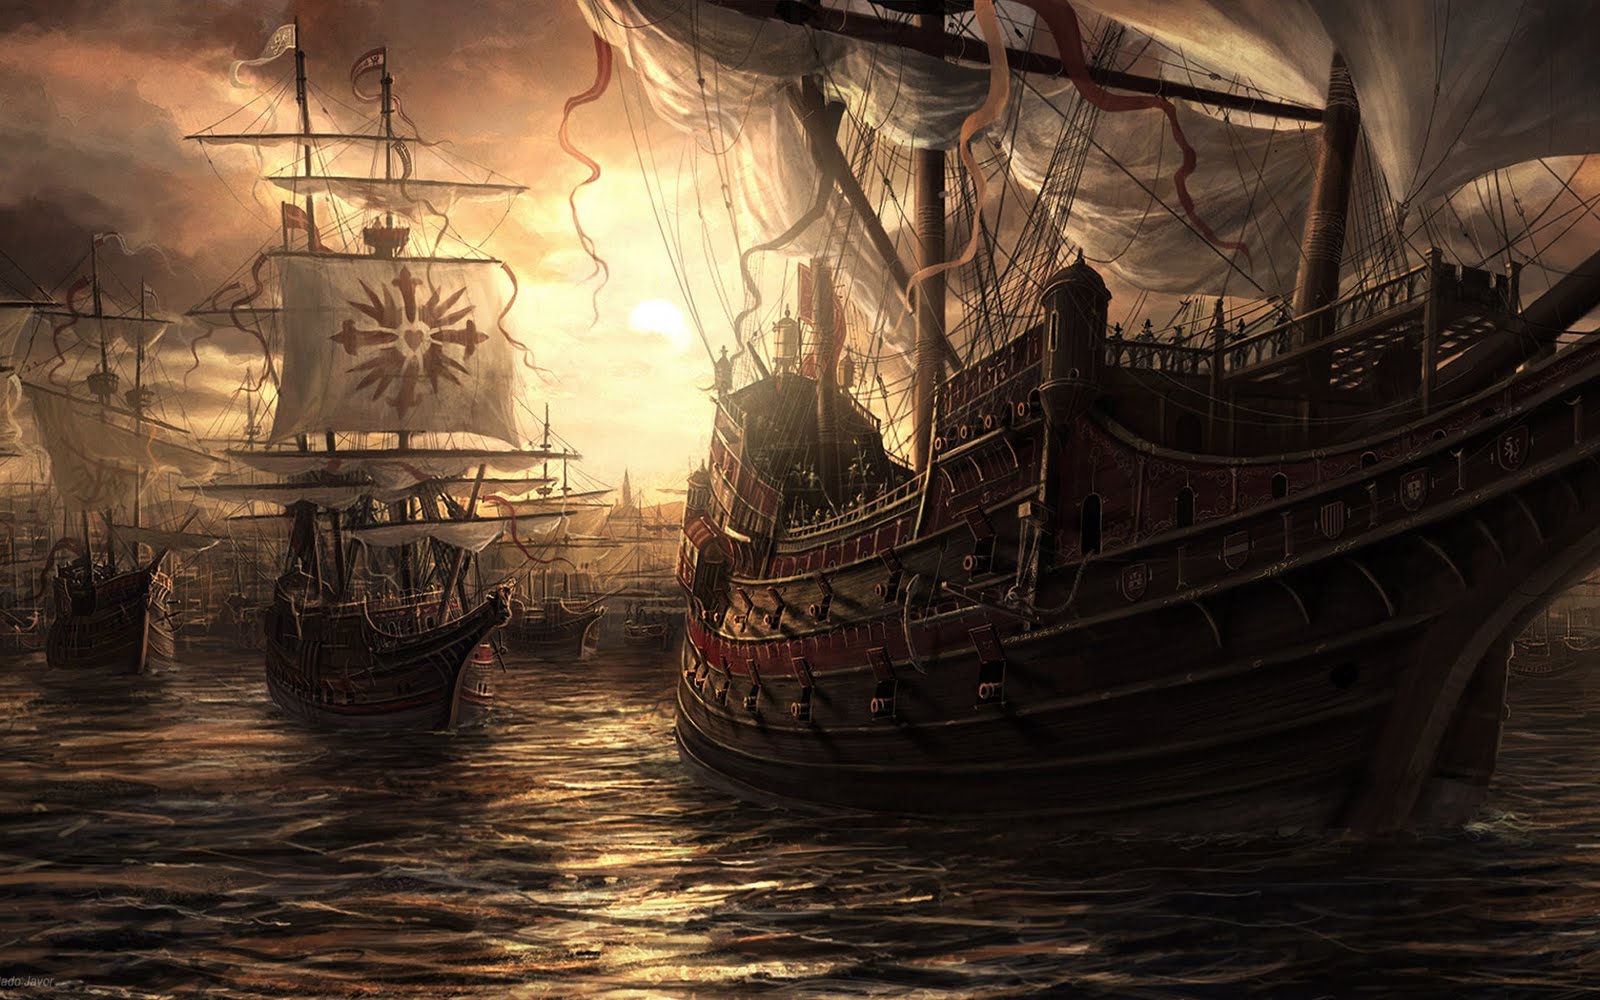  October 7 2014 at 1600 1000 in pirate ship hd wallpaperjpeg